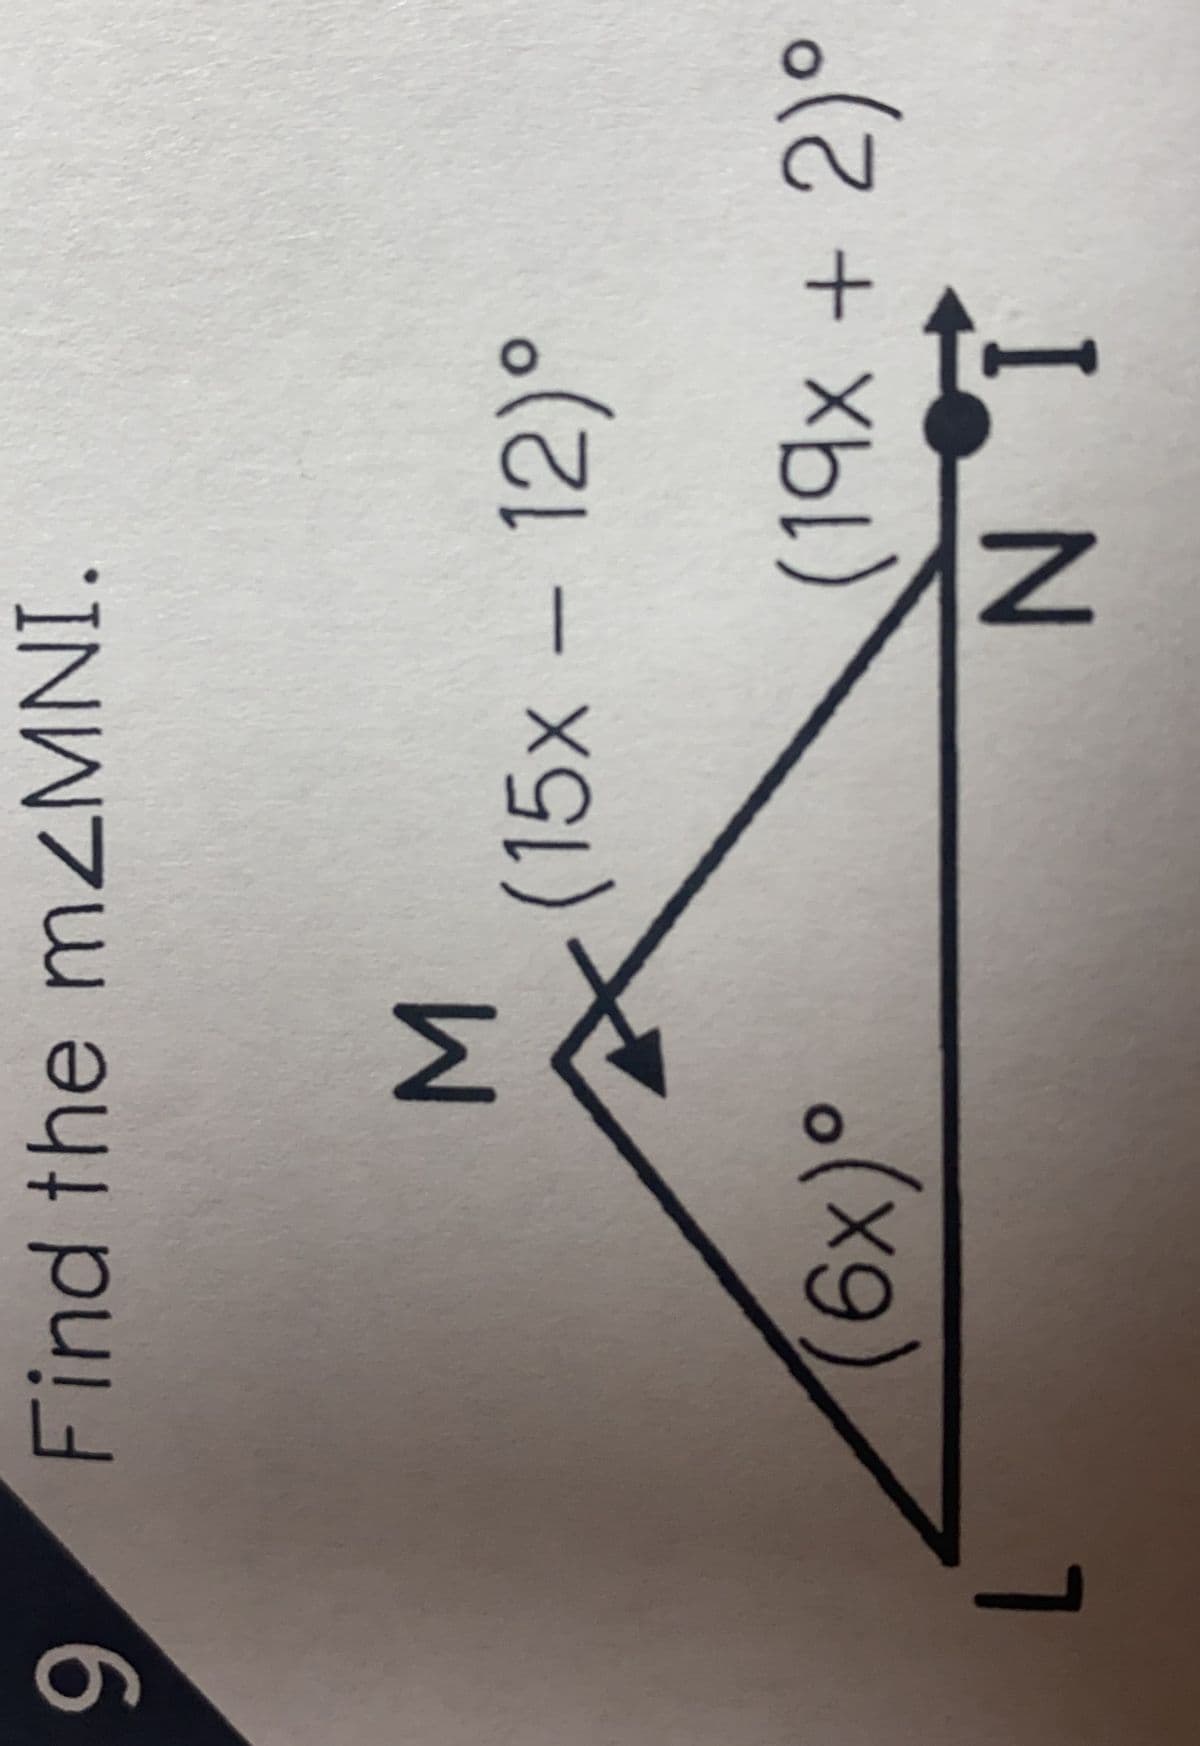 9
L
Find the mZMNI.
M
(6x)⁰
(15x - 12)°
(19x + 2)°
ΝΙ